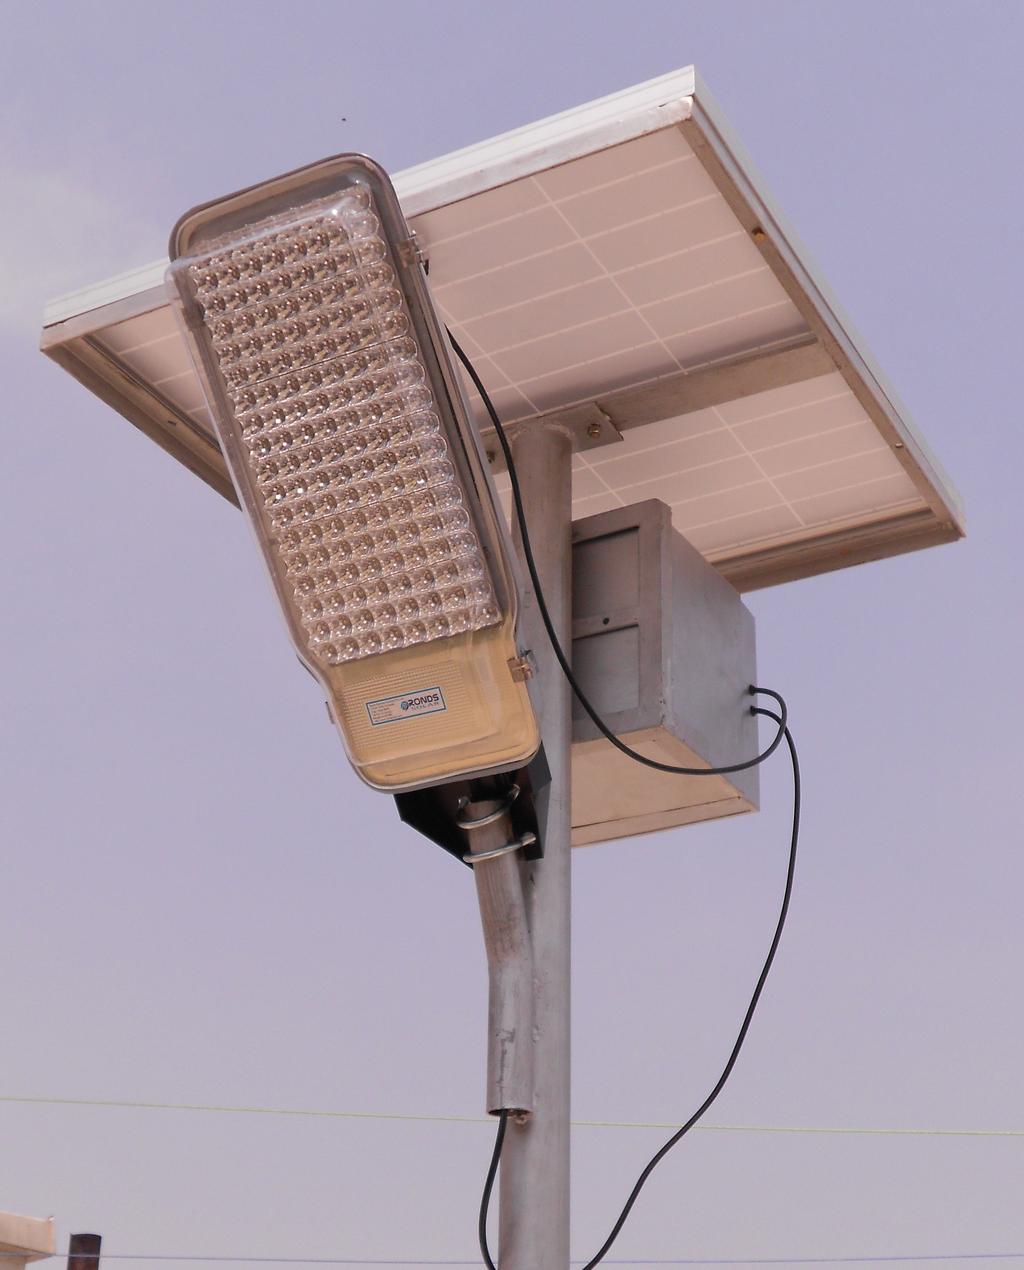 9. Solar LED Street Light Solar LED Street Light SL Model 1 RS-25-SL-17-144B 2 RS-30-SL-18-144B 3 RS-50-SL-26-144B Features Street Light, 25 Watt Panel, 144 LED with 144 Reflectors 12V(17Ah) Battery